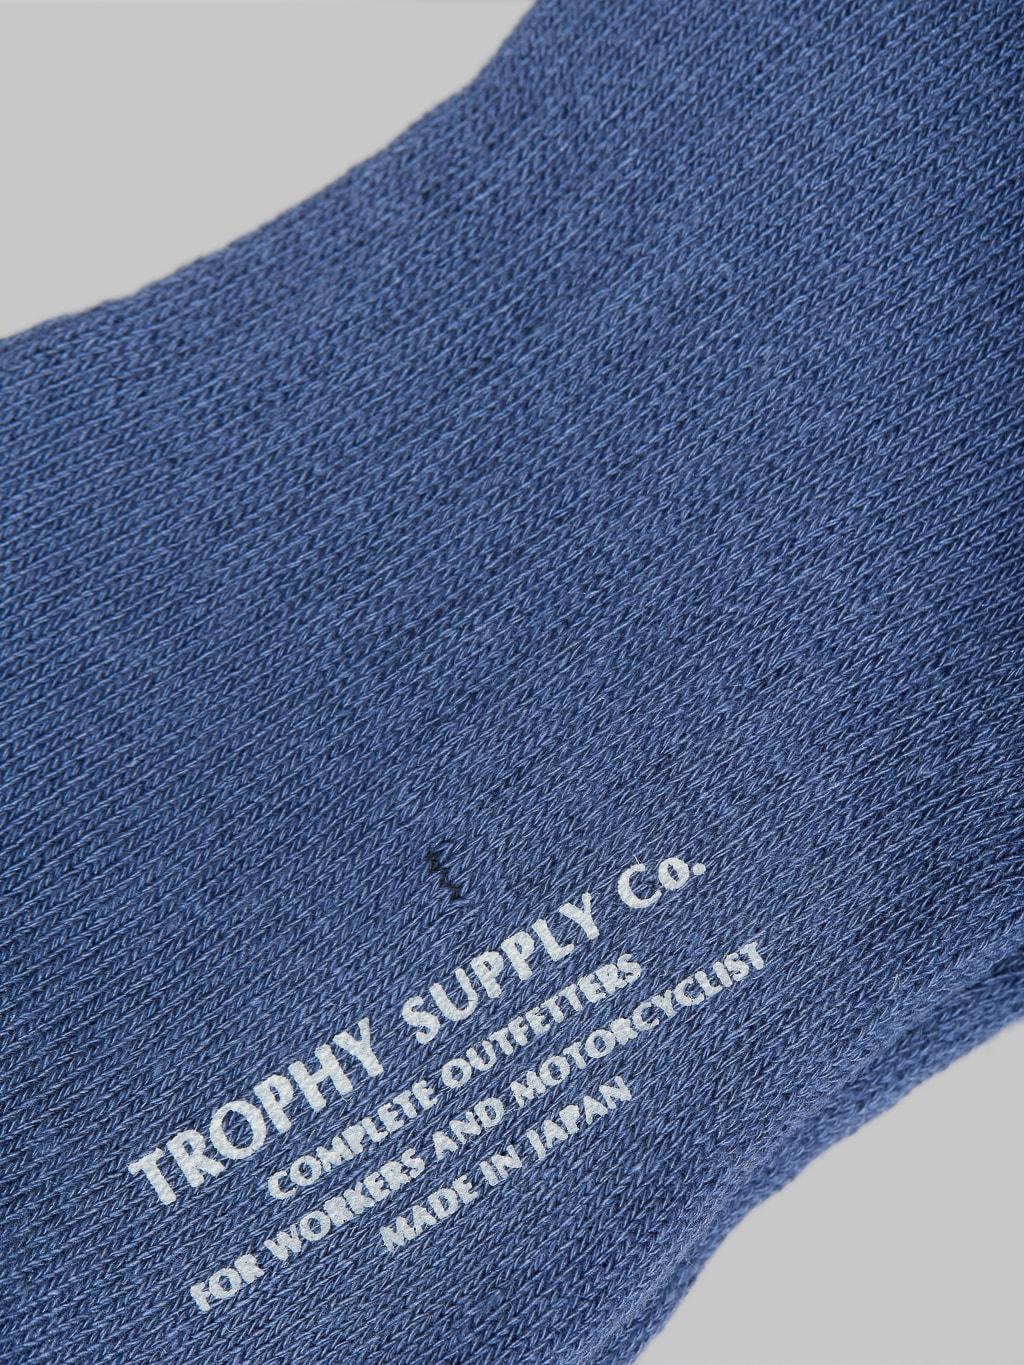 trophy clothing regular boots socks navy stamped logo